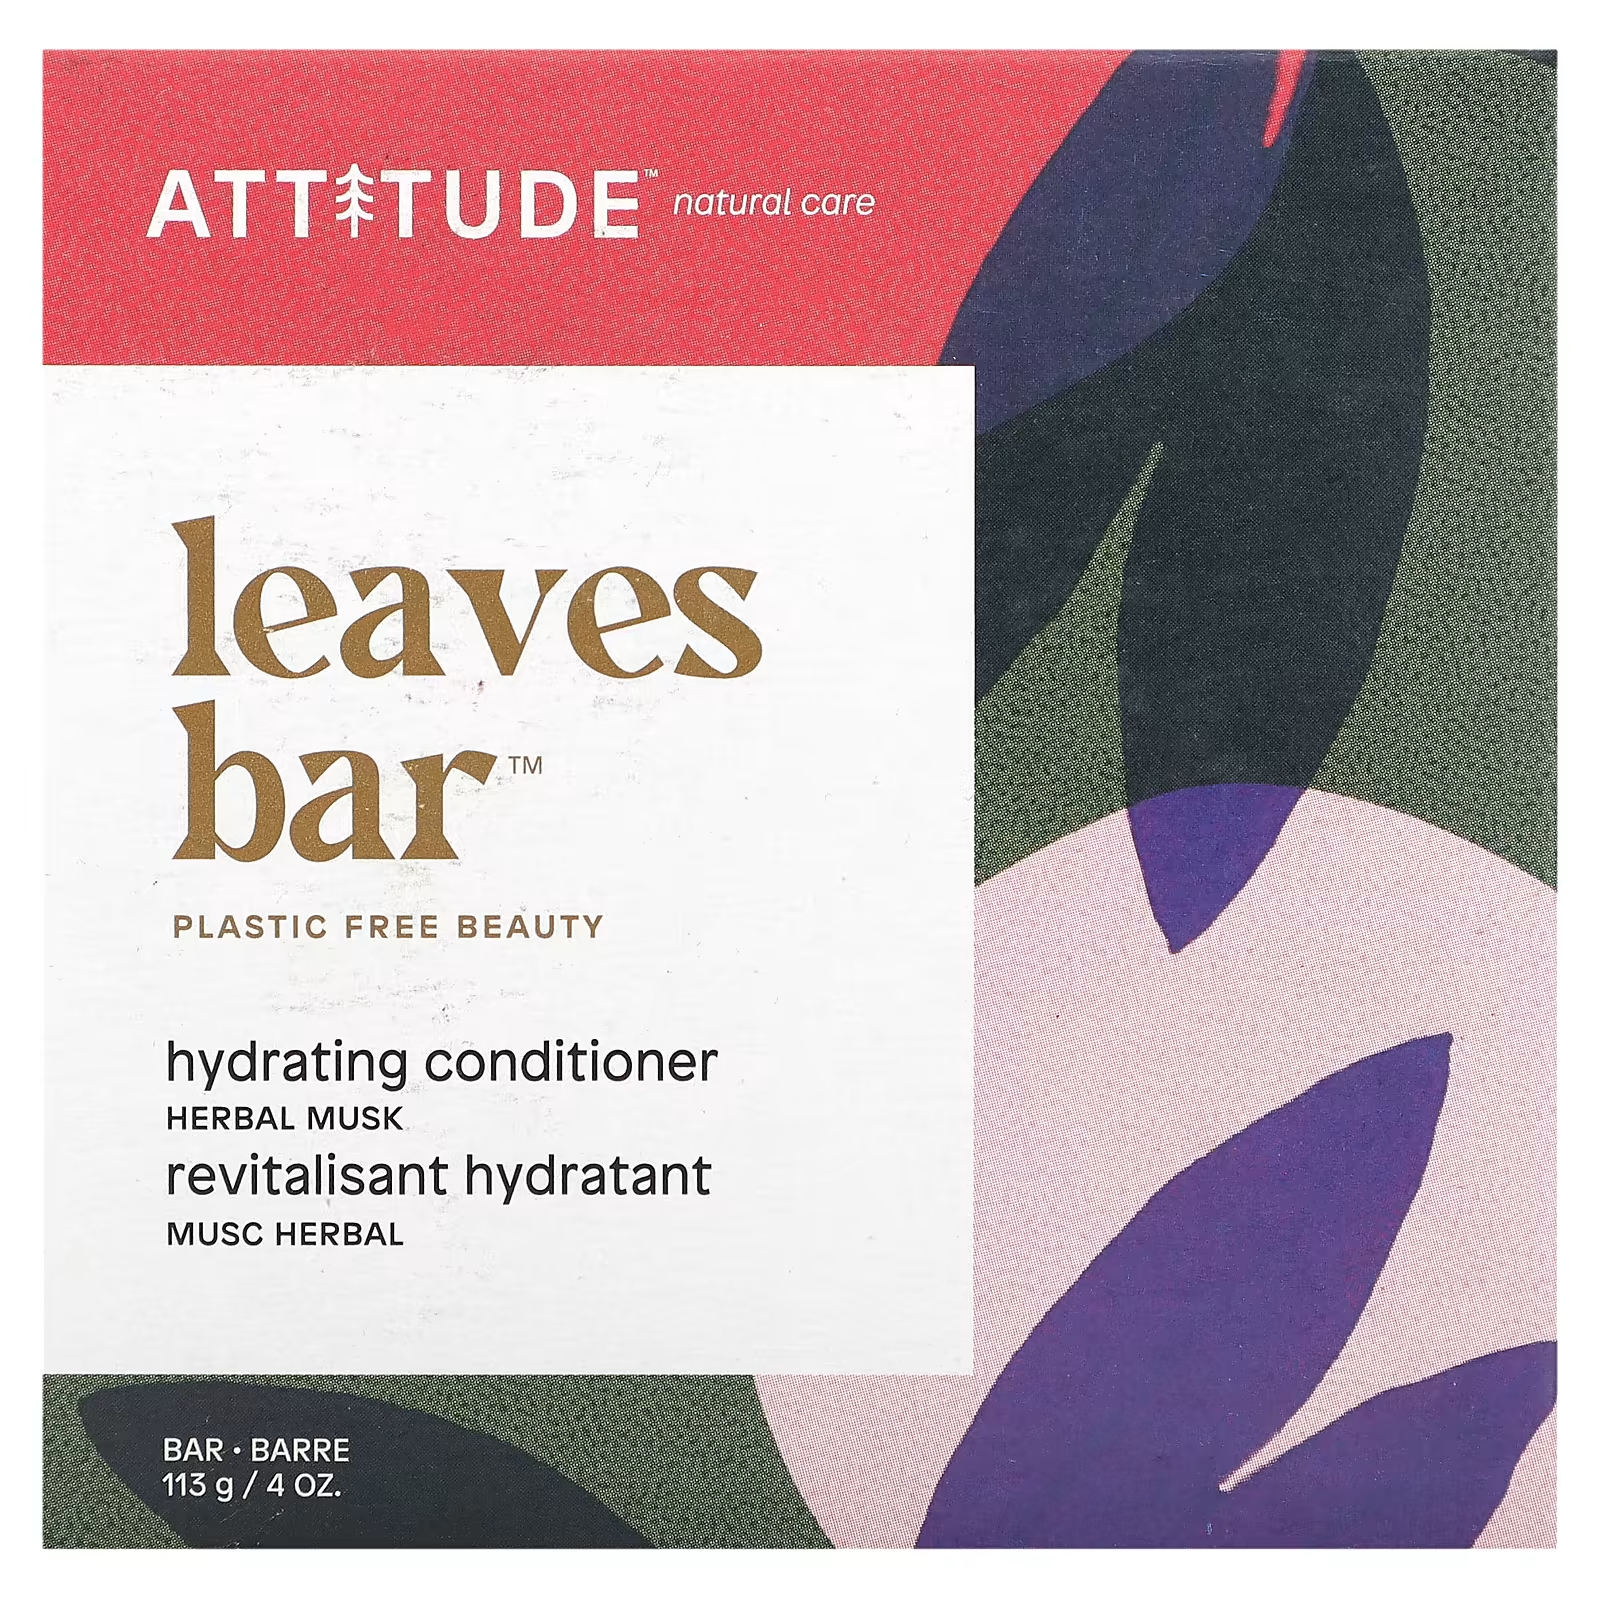 Кондиционер ATTITUDE Leaves Bar увлажняющий травяной мускус, 113 г детокс кондиционер attitude leaves bar морская соль 113 г